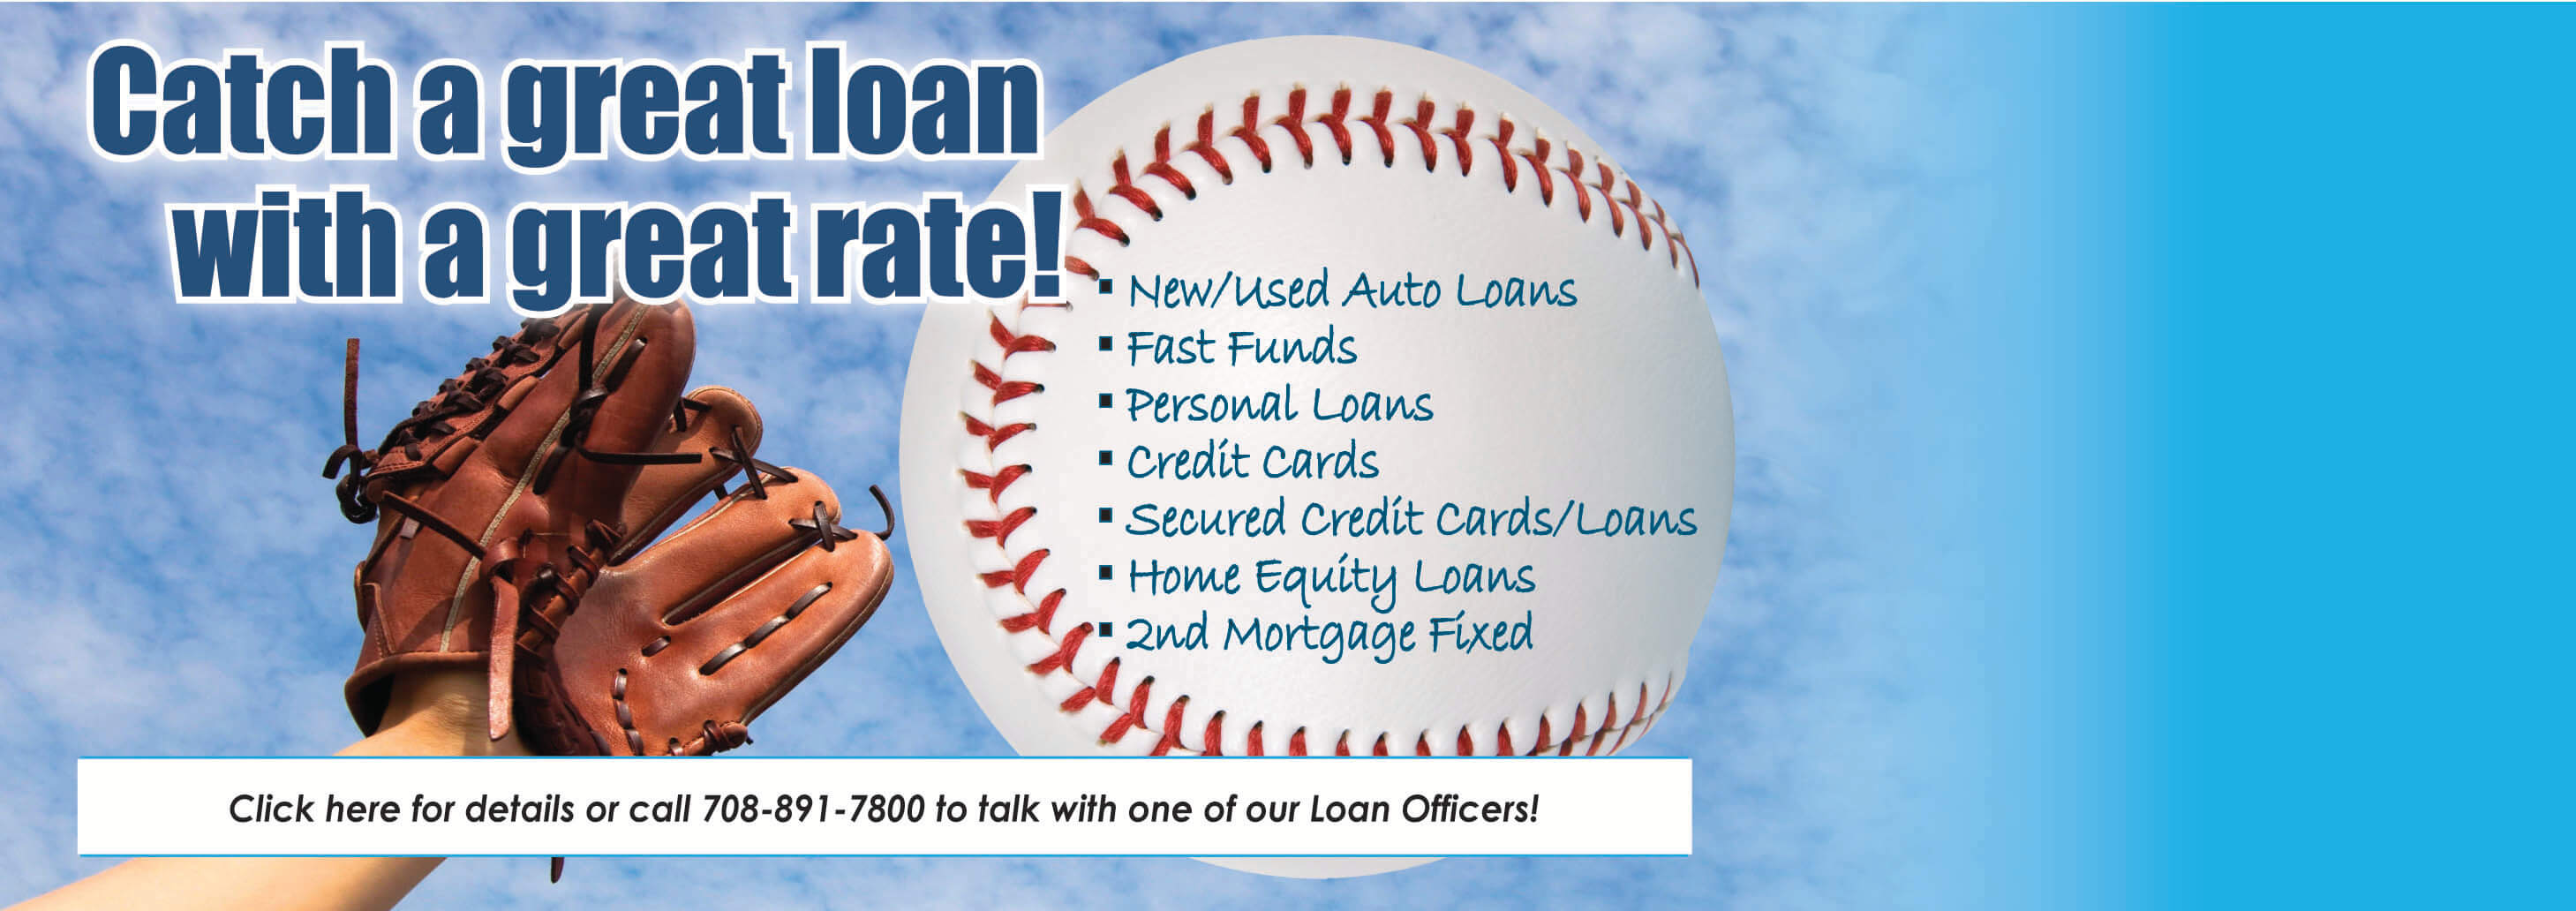 All loans